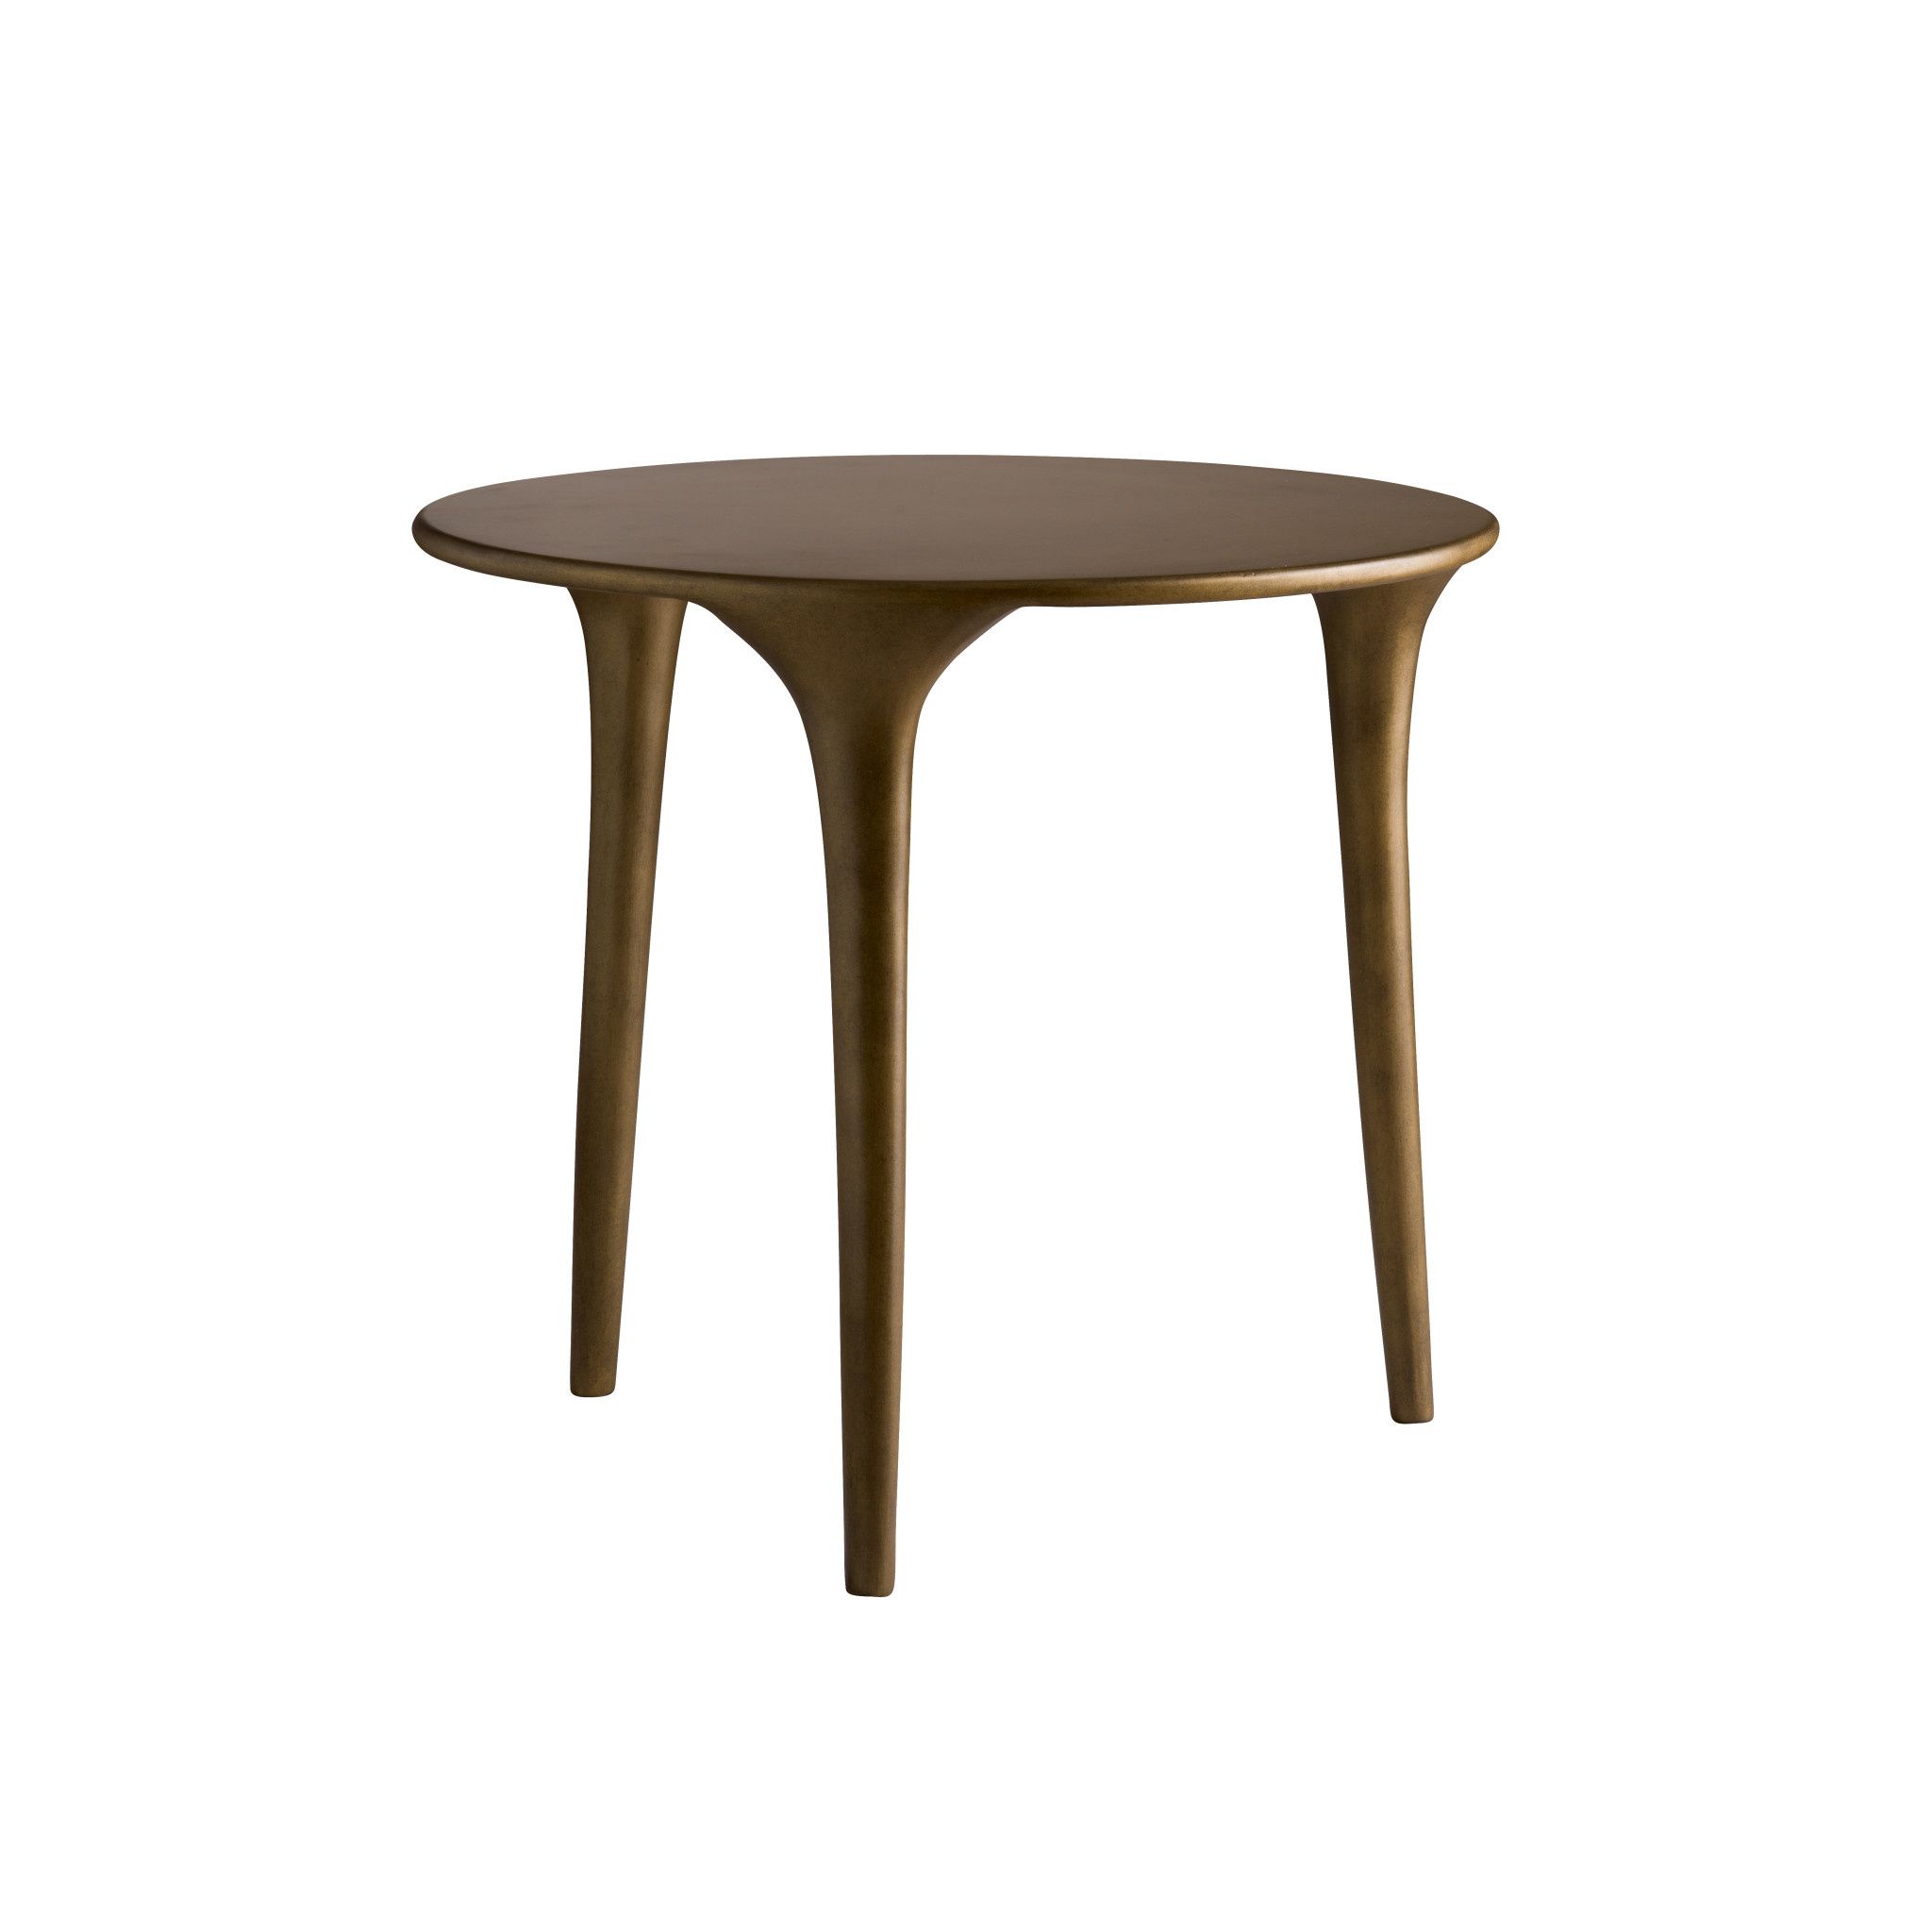 Three Legged Coffee Table, Honey Glaze, Medium • Couleur Locale Regarding 3 Leg Coffee Tables (View 16 of 20)